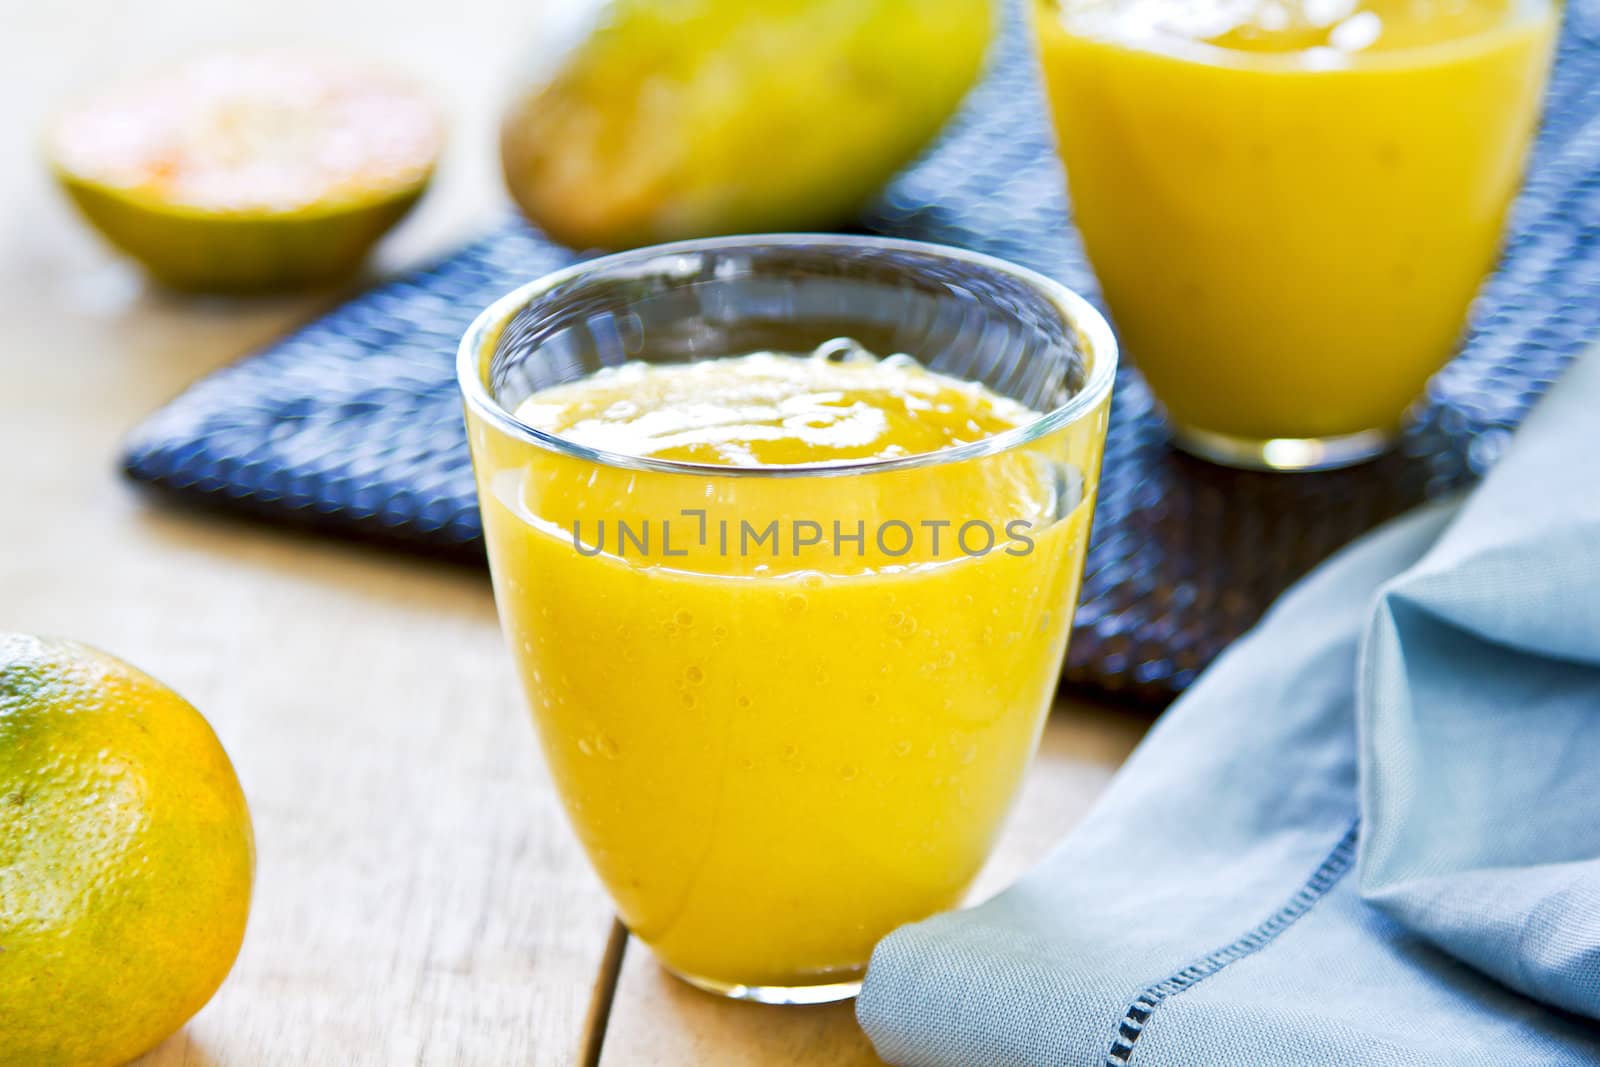 Mango and Orange smoothie by fresh ingredients